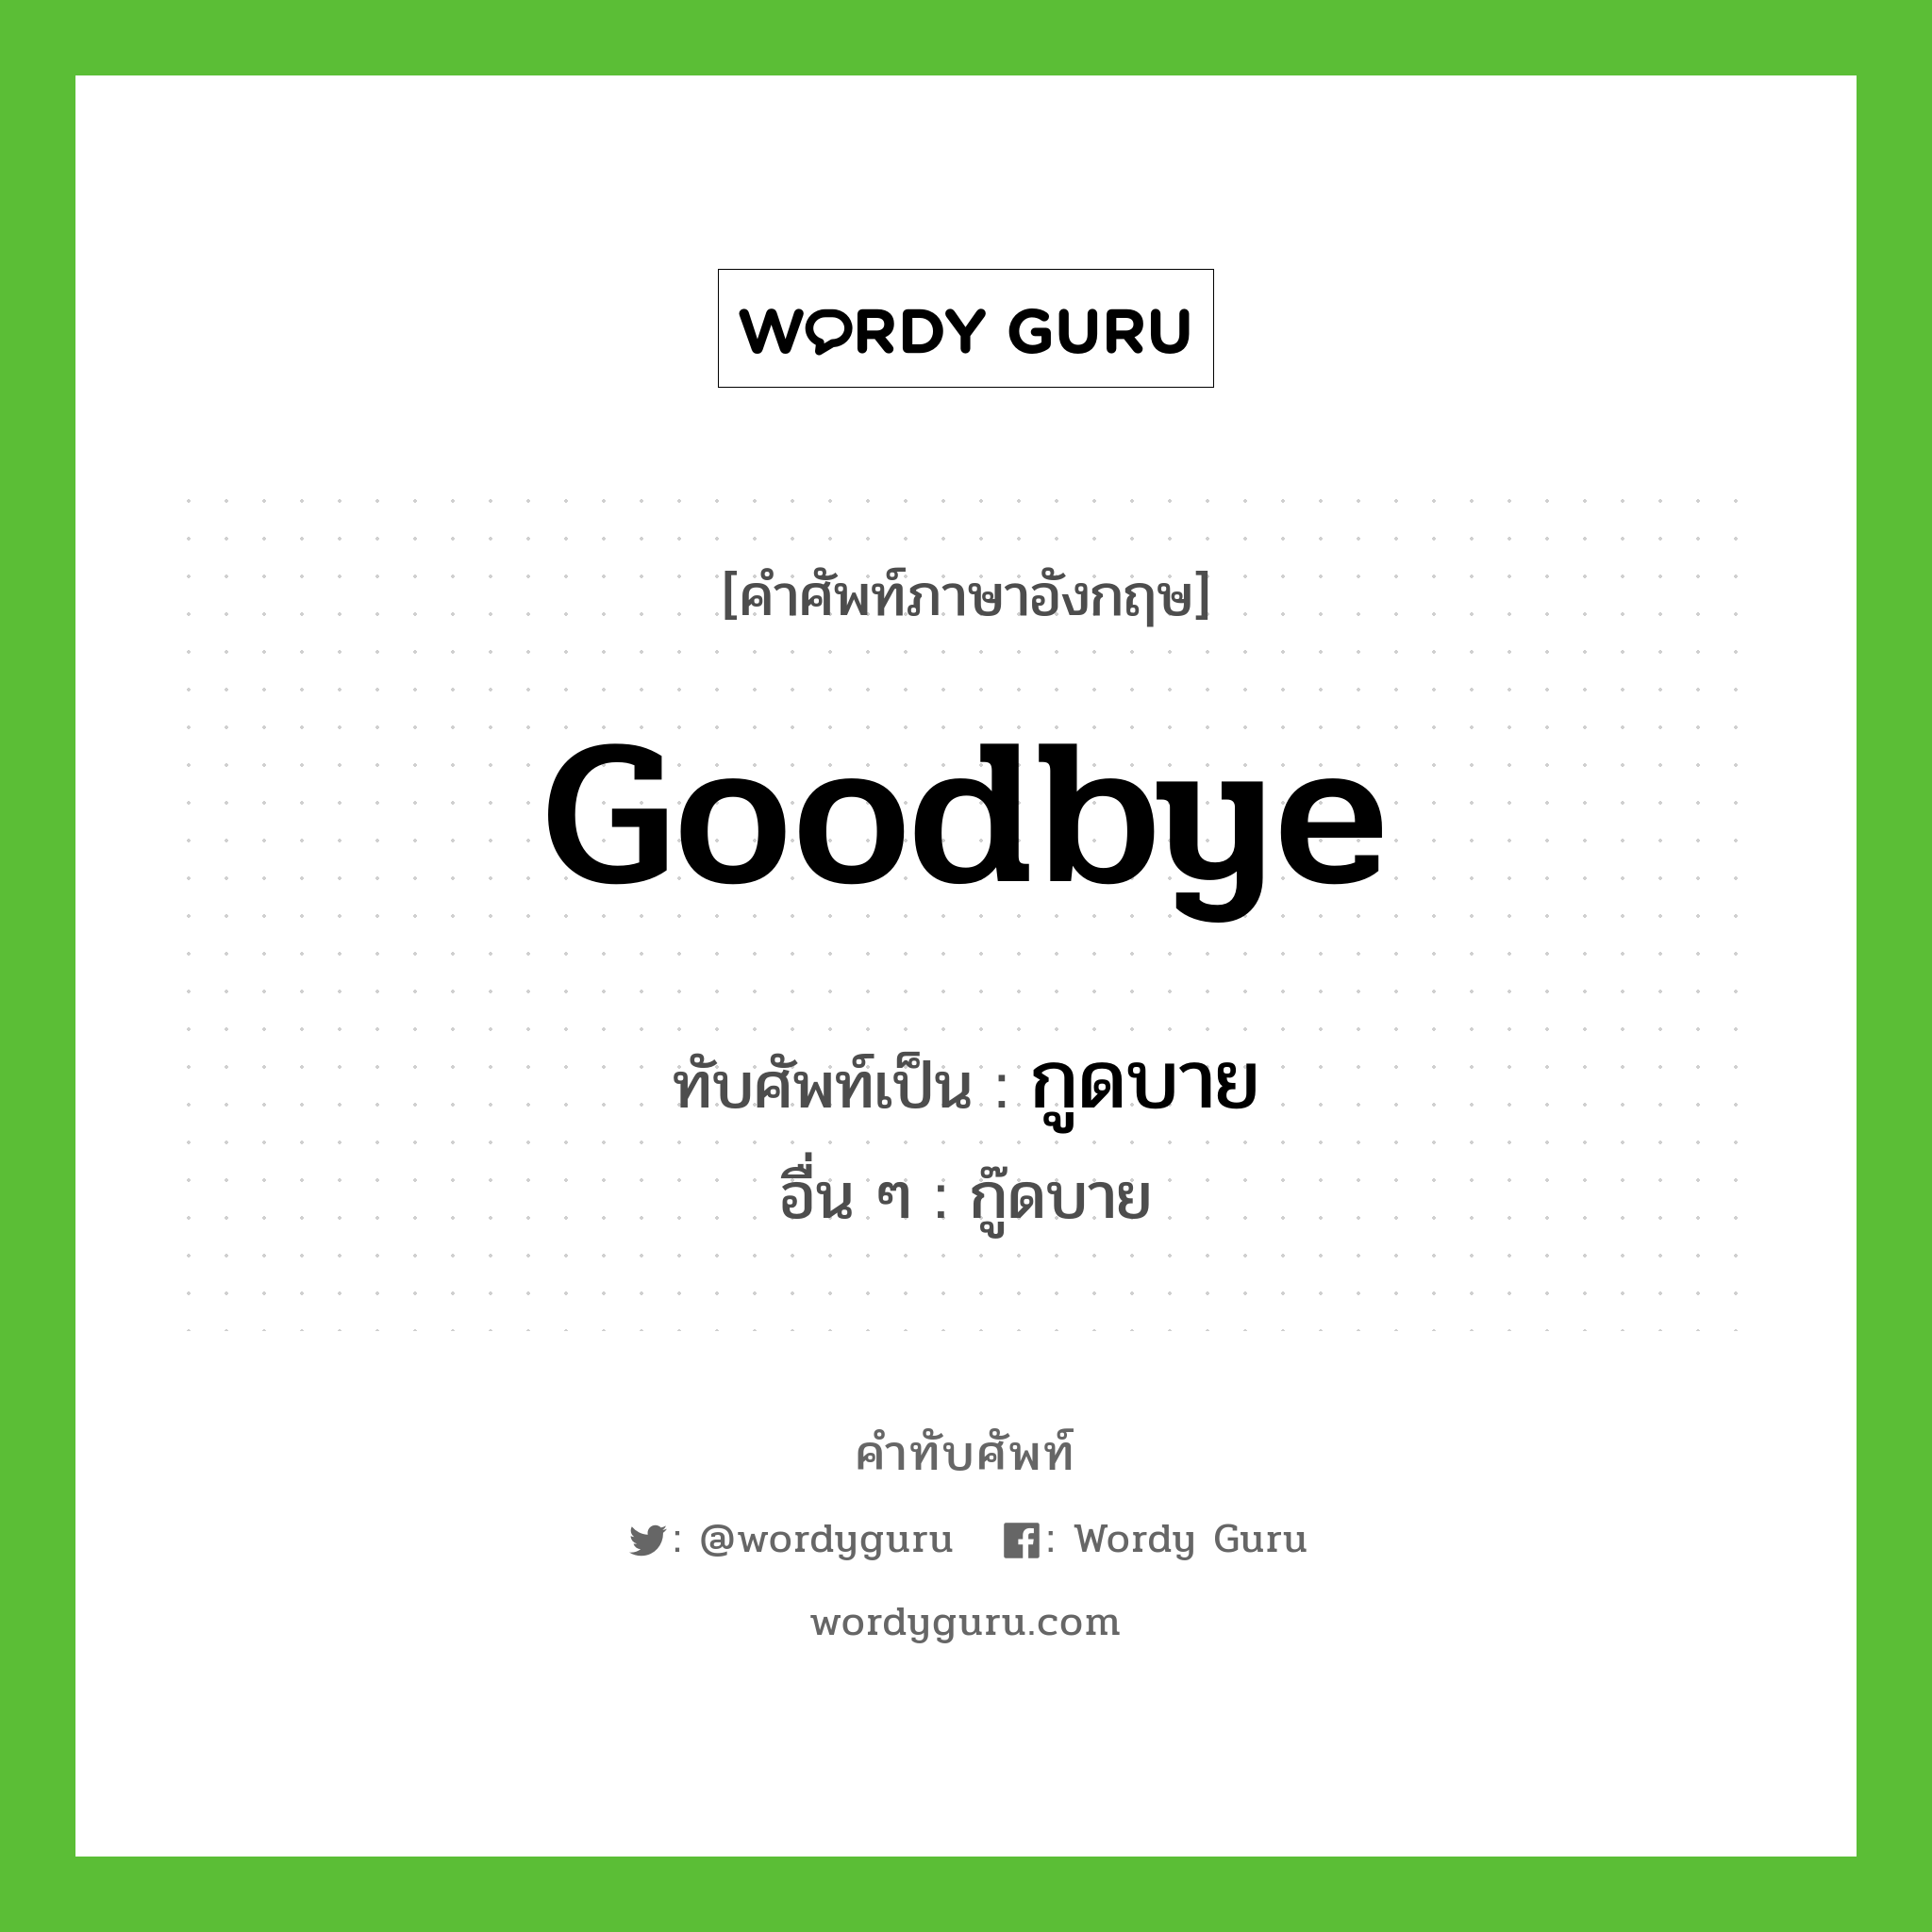 Goodbye เขียนเป็นคำไทยว่าอะไร?, คำศัพท์ภาษาอังกฤษ Goodbye ทับศัพท์เป็น กูดบาย อื่น ๆ กู๊ดบาย